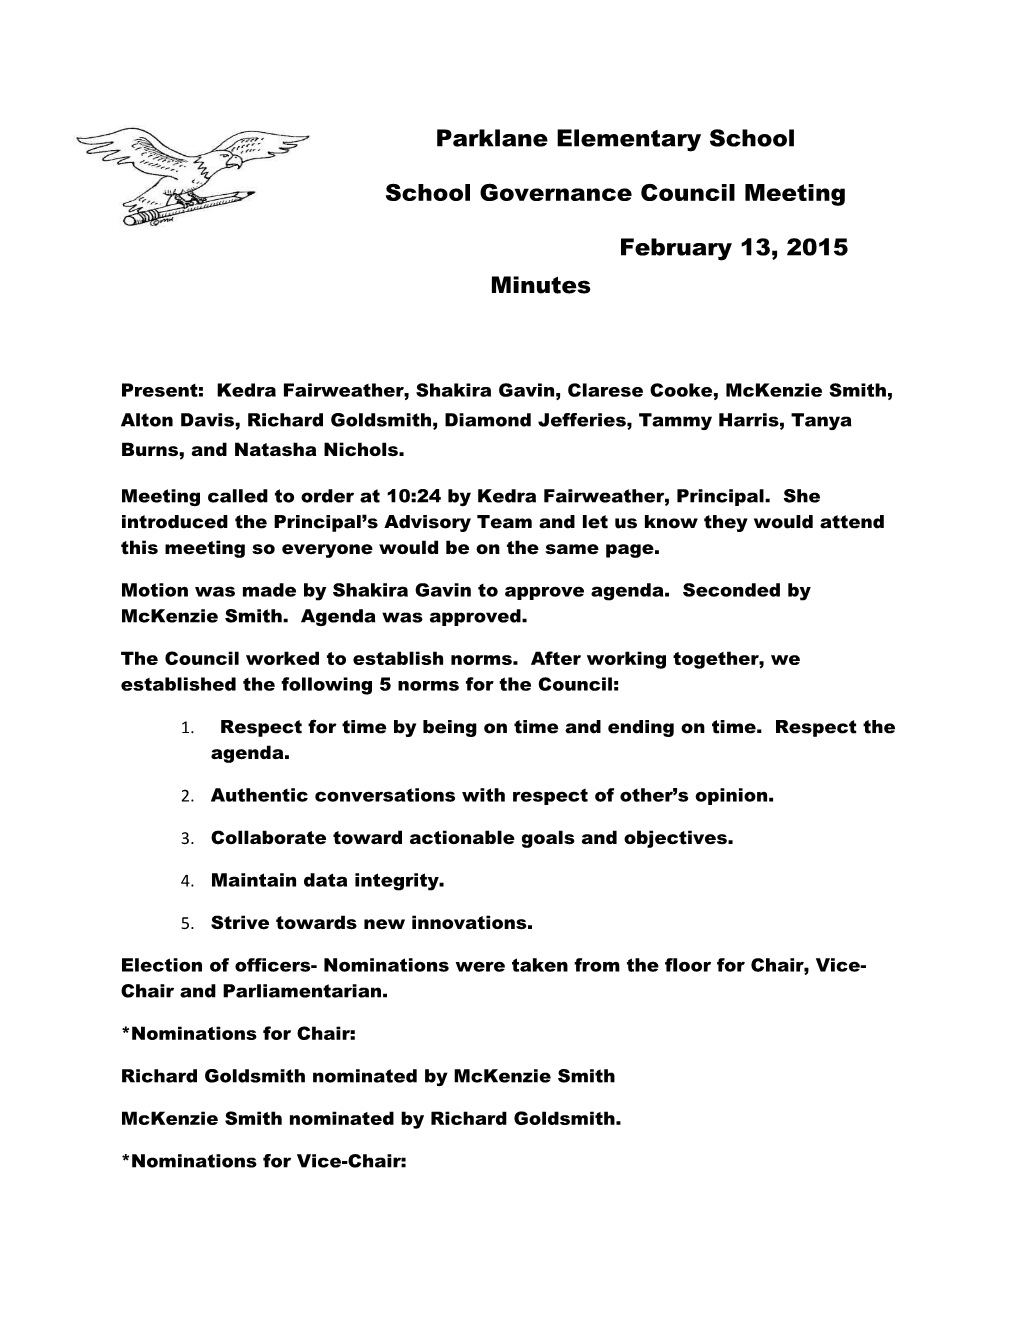 School Governance Council Meeting